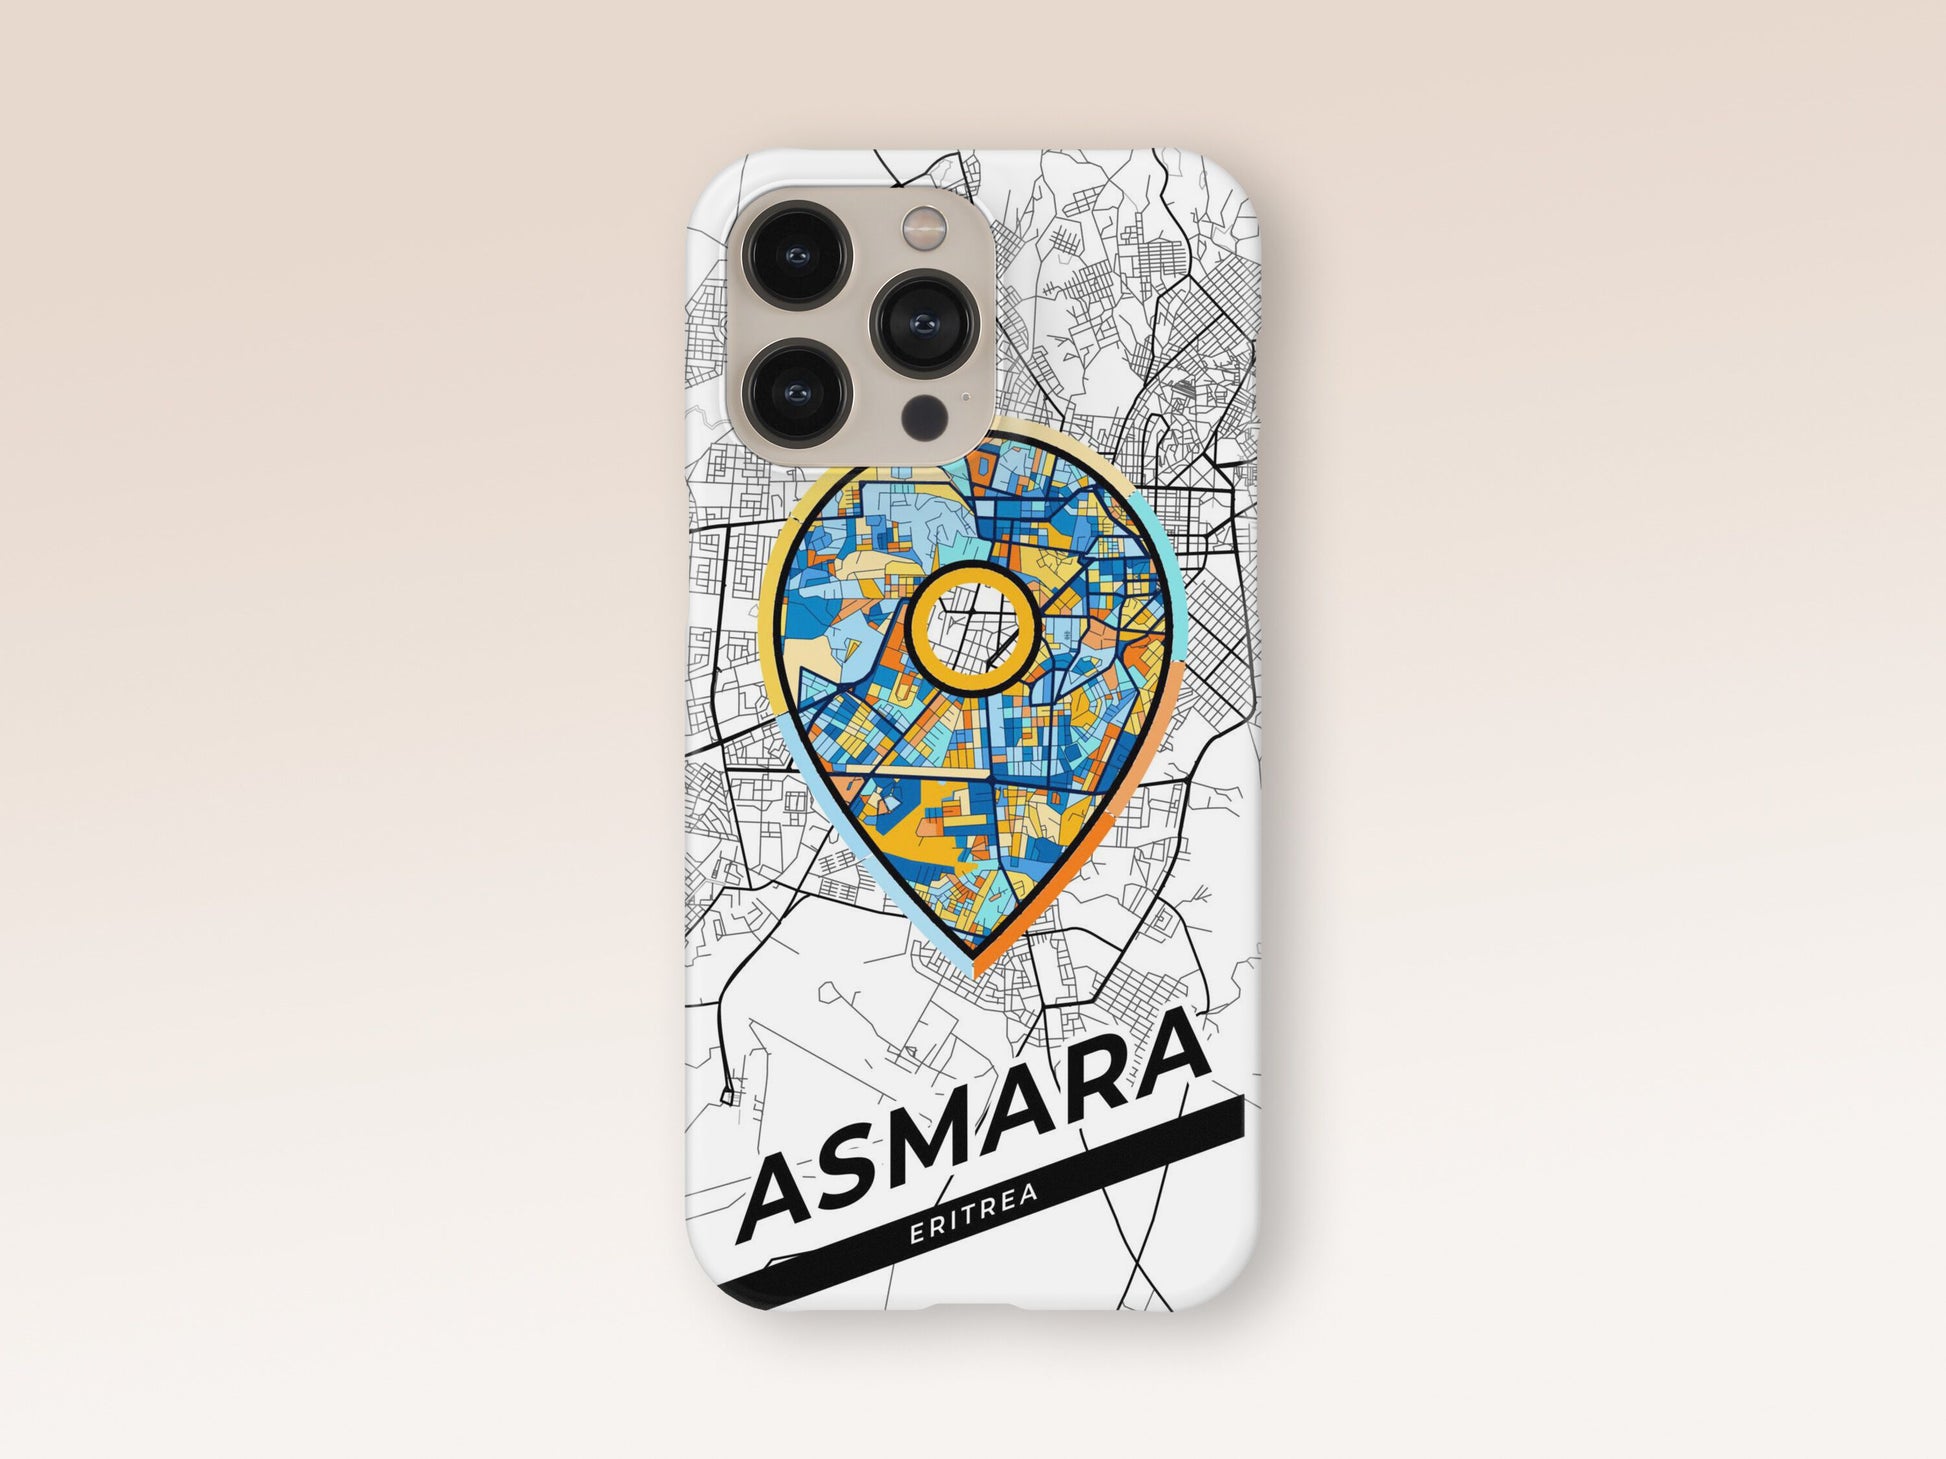 Asmara Eritrea slim phone case with colorful icon. Birthday, wedding or housewarming gift. Couple match cases. 1